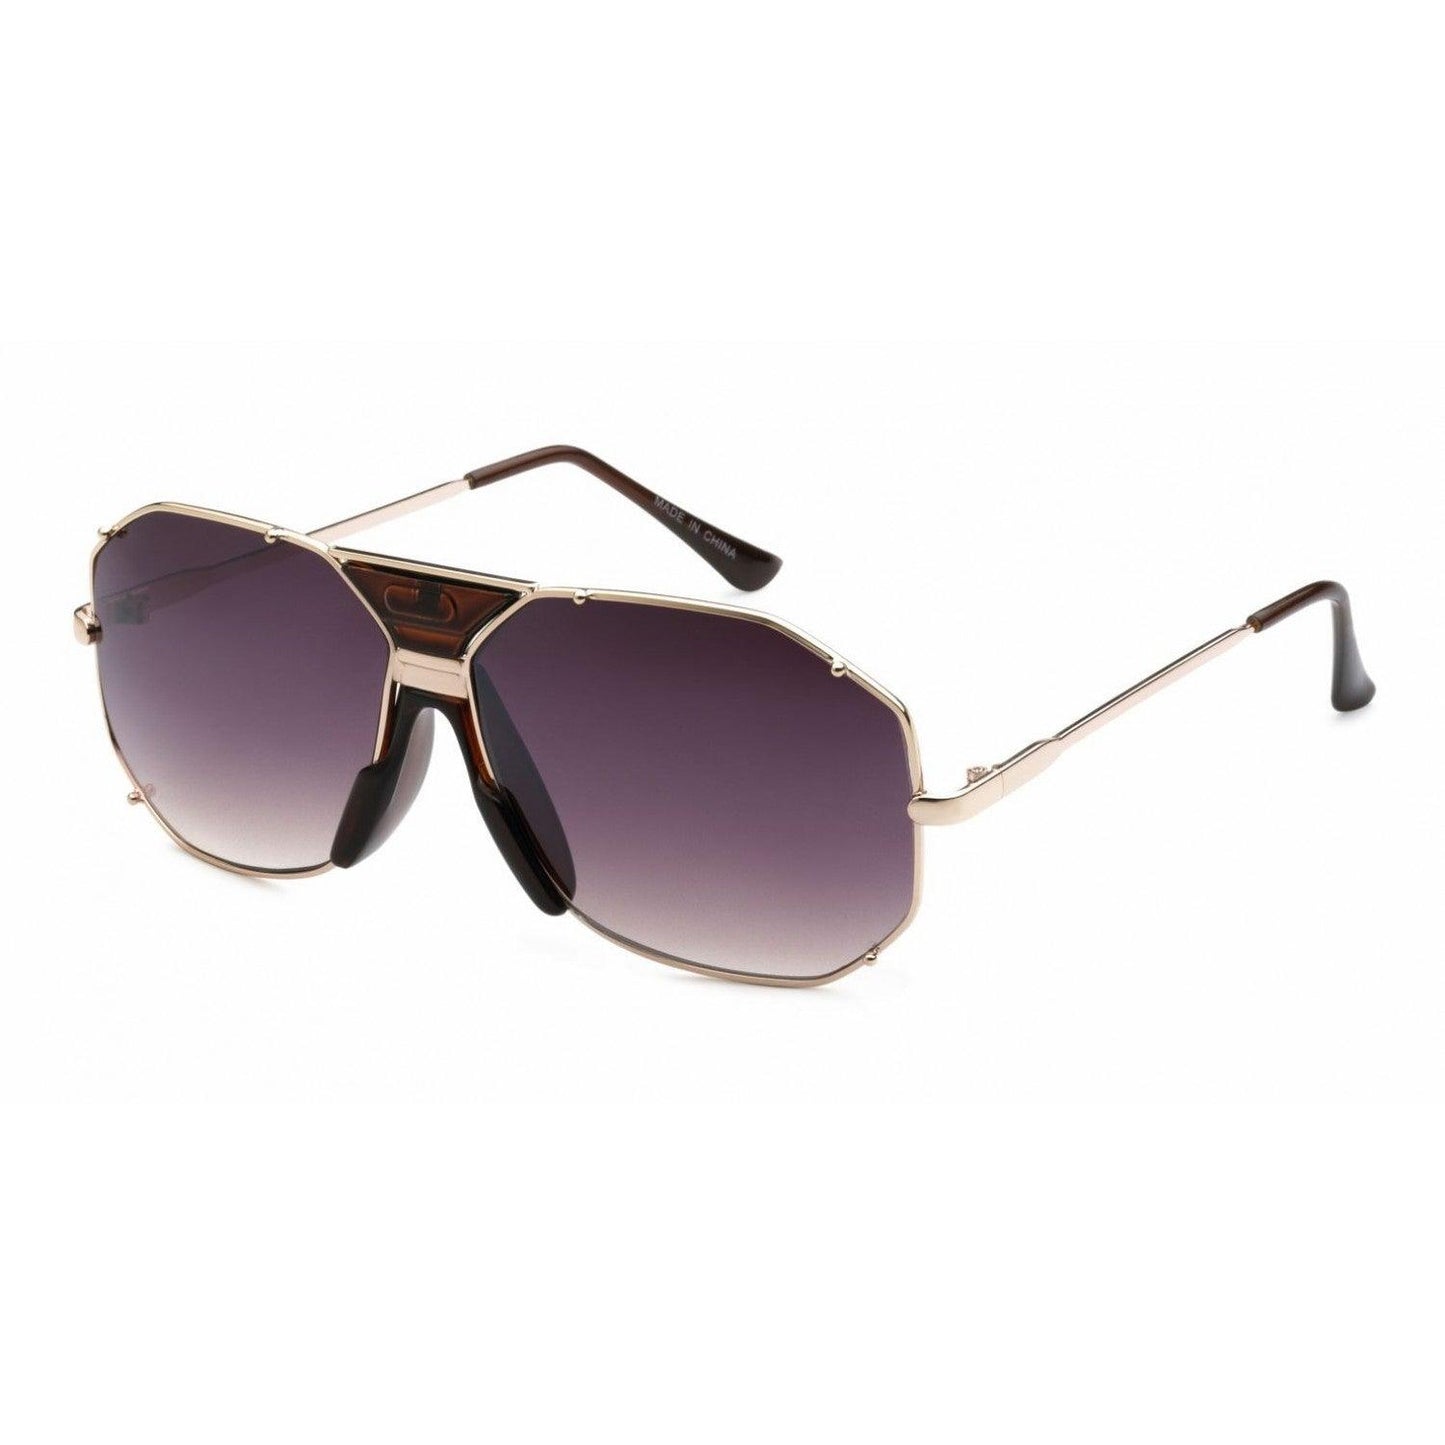 "MR. FOXY" Aviator Sunglasses - Weekend Shade Sunglasses